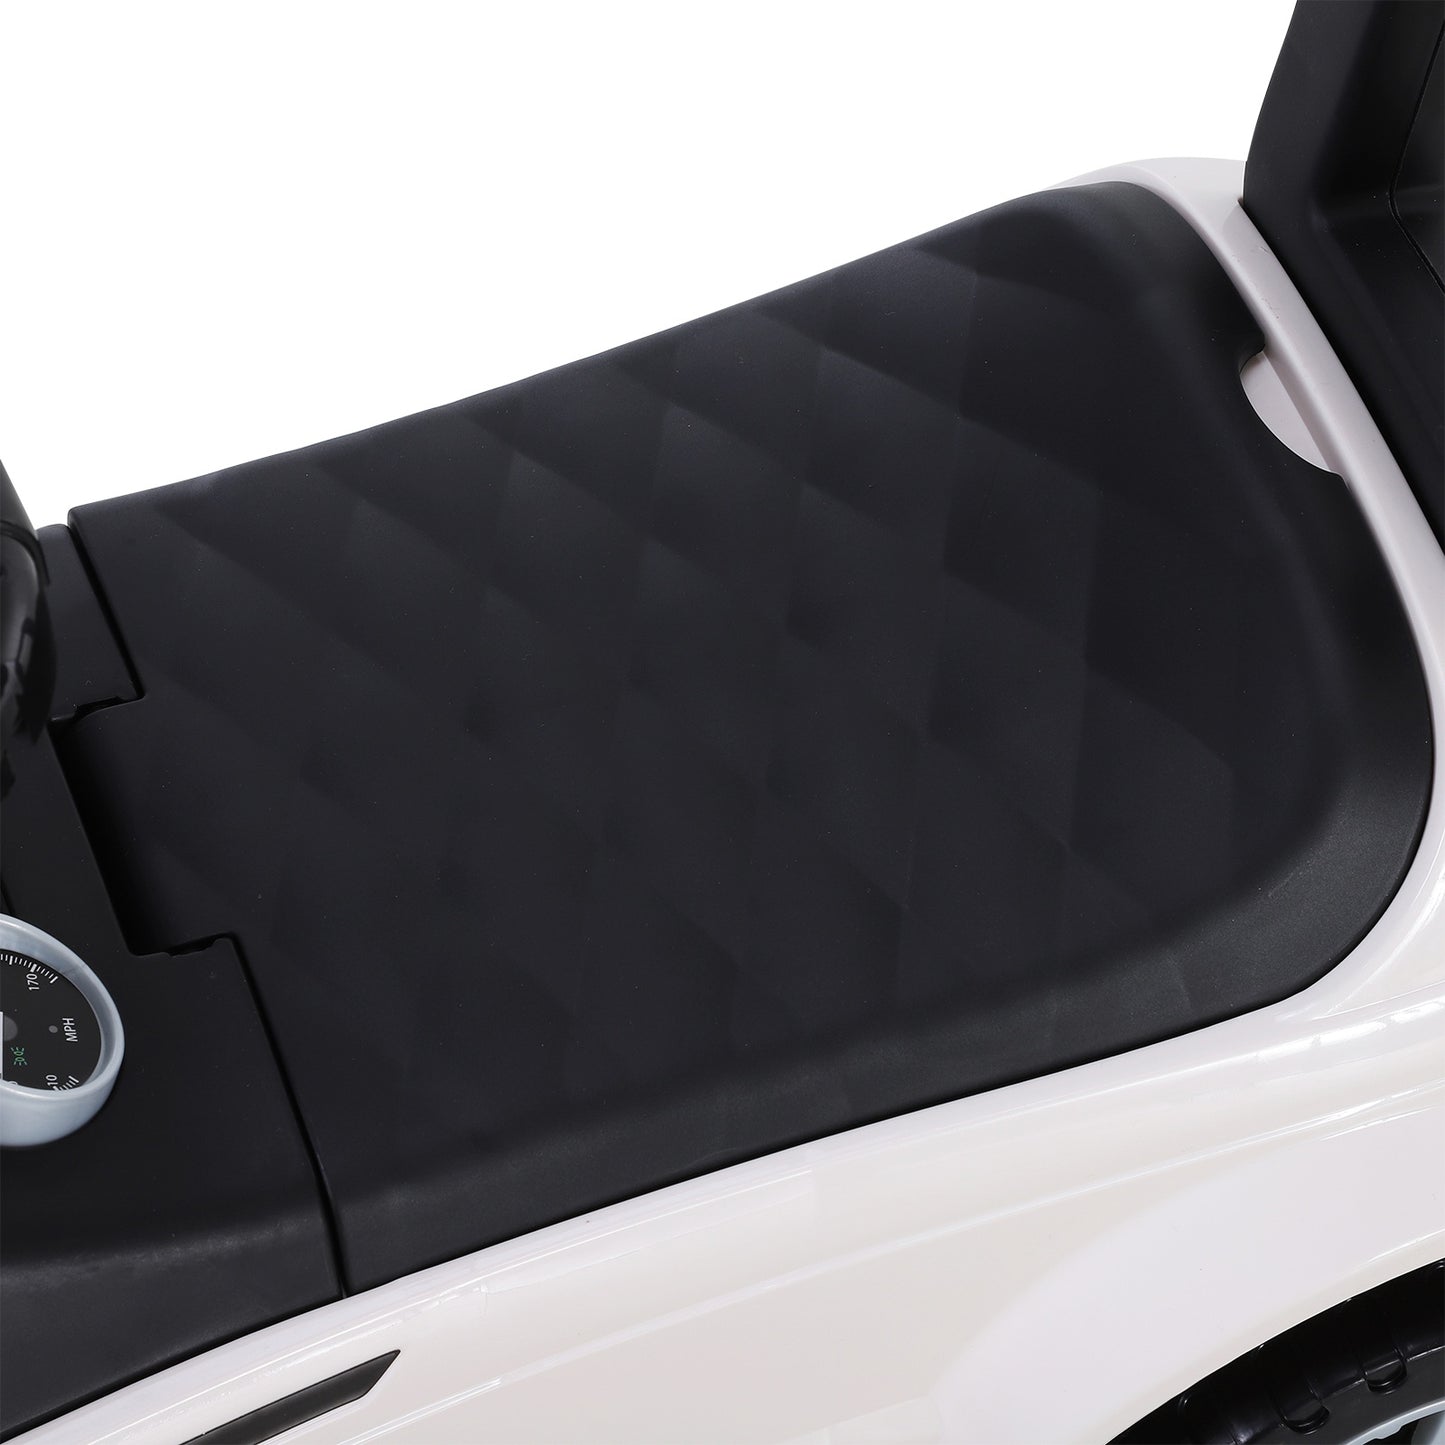 HOMCOM 3-in-1 Ride-On Car Kids Car Walker Stroller Push-Along w/ Horn Wheel & Under Seat Storage White